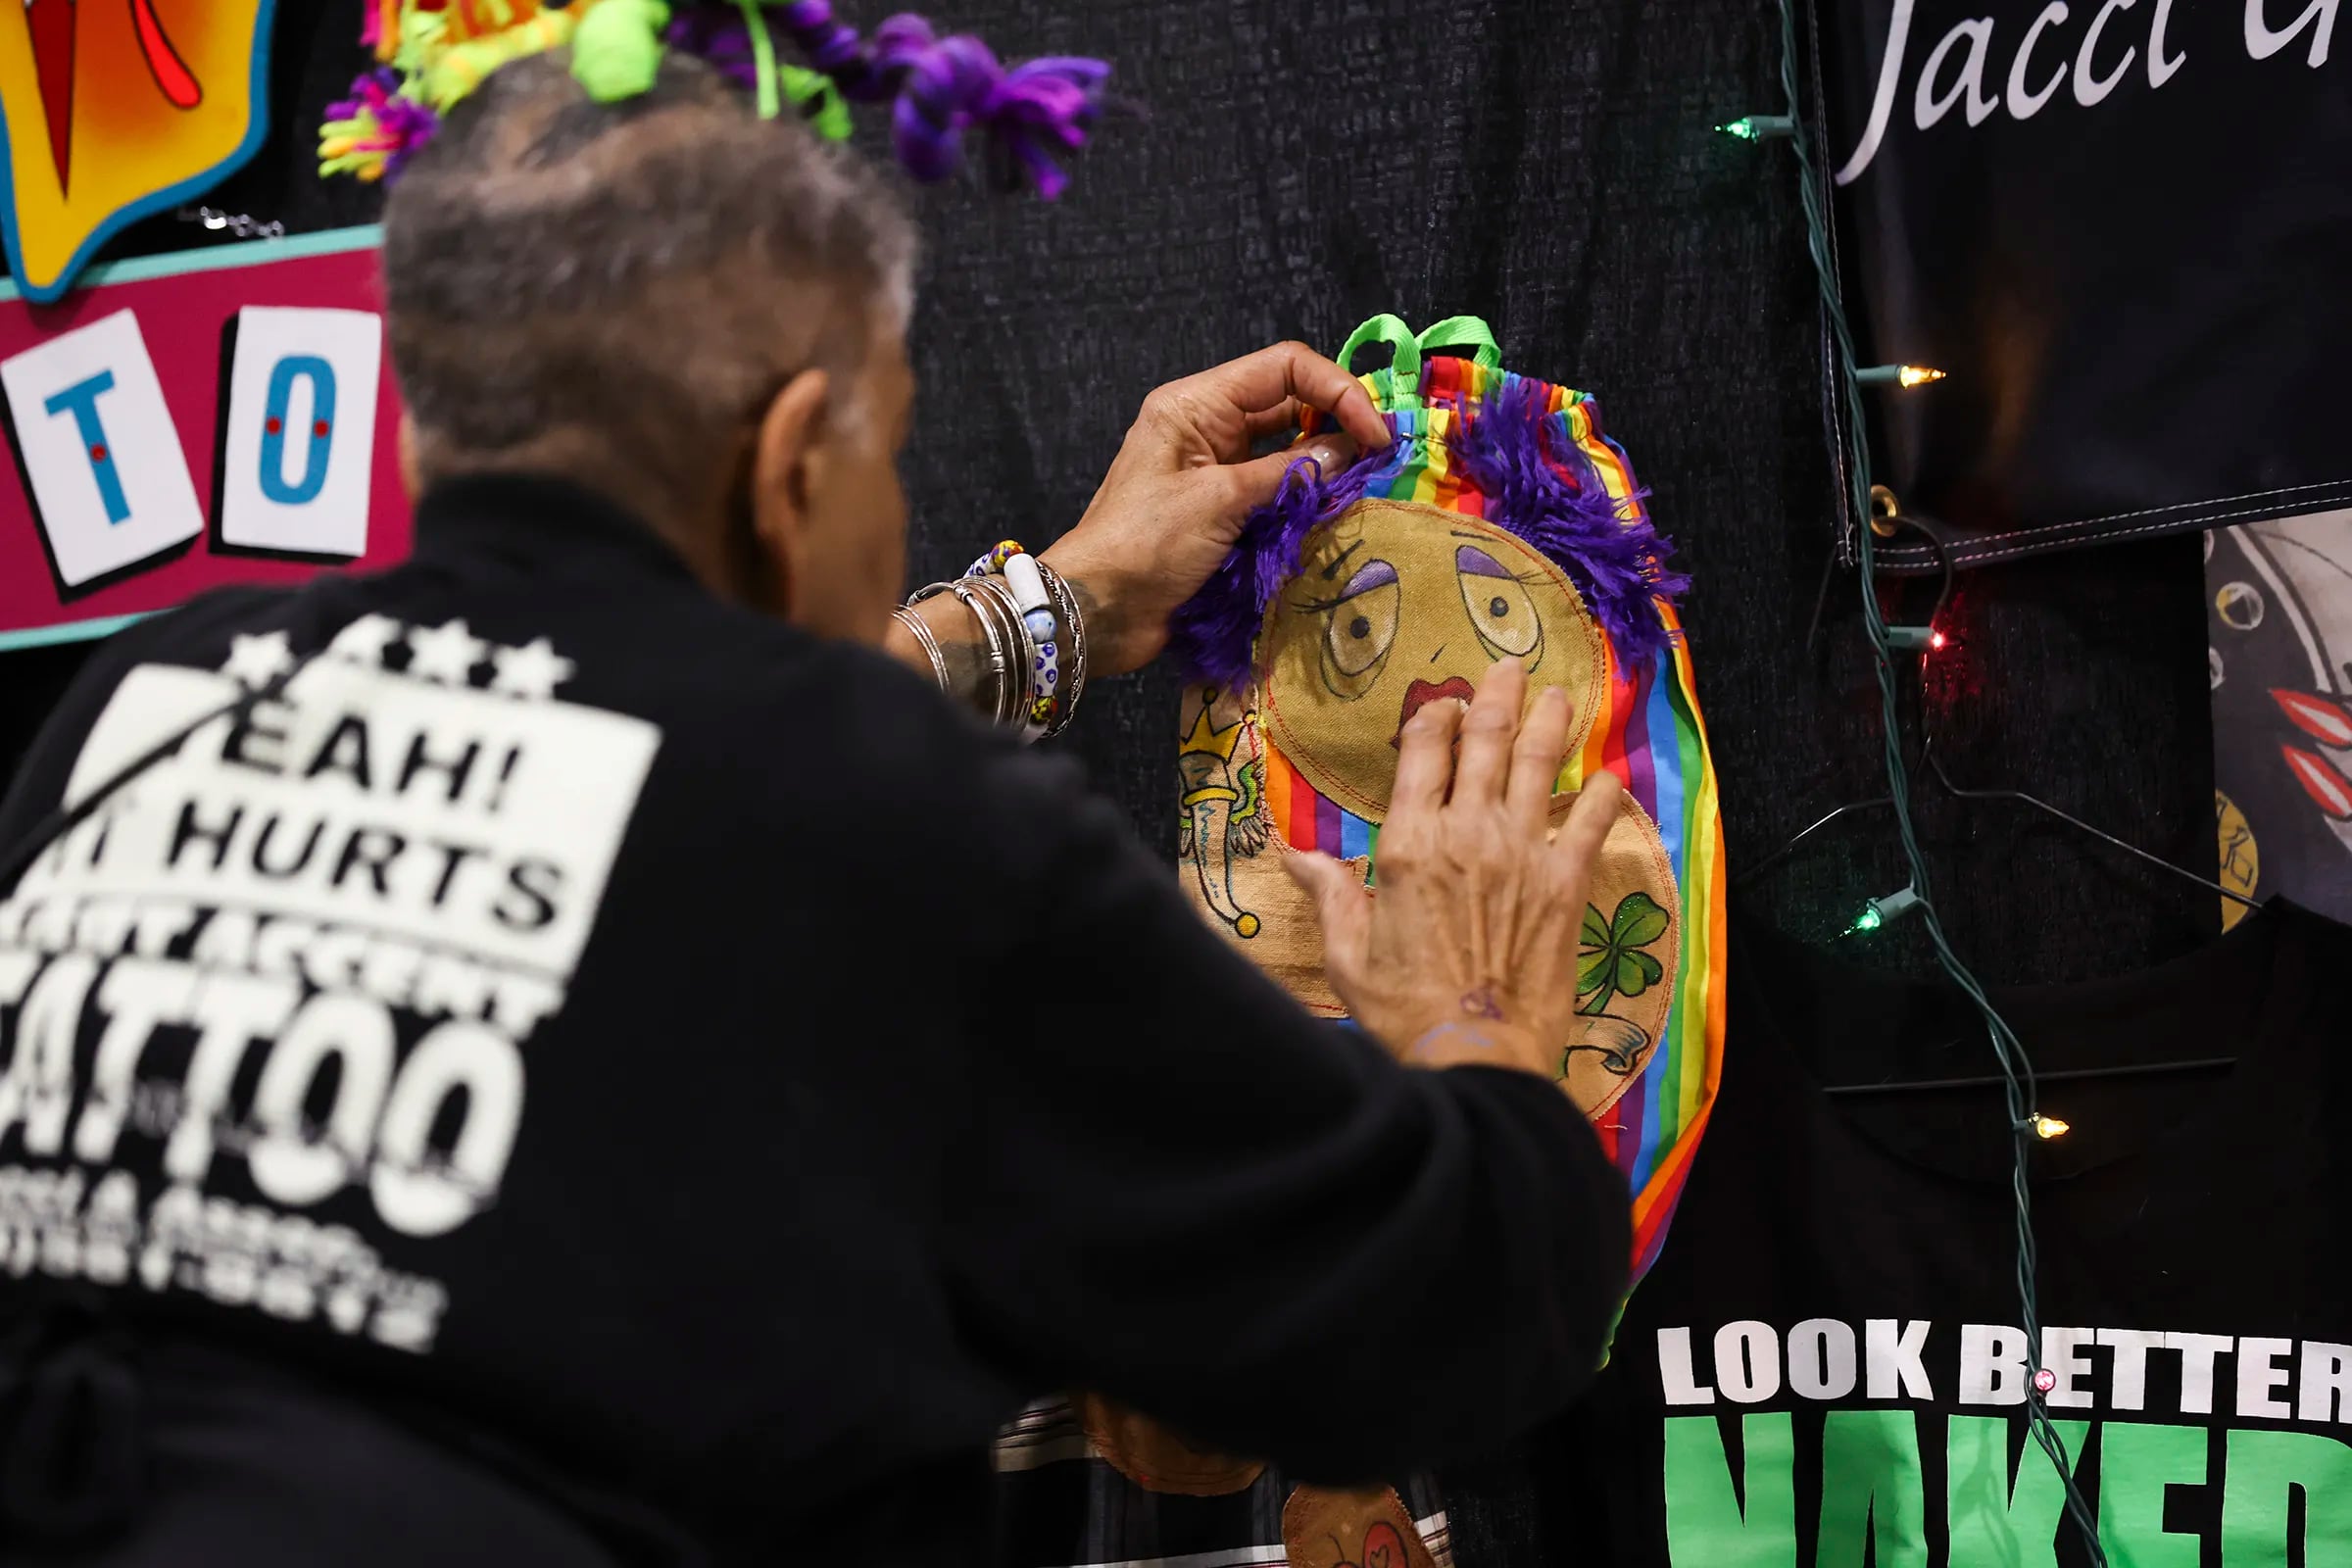 Tattoo artist Jacci Gresham hangs up her work at the Philadelphia Tattoo Arts Festival at the Convention Center in Philadelphia on Jan. 27.